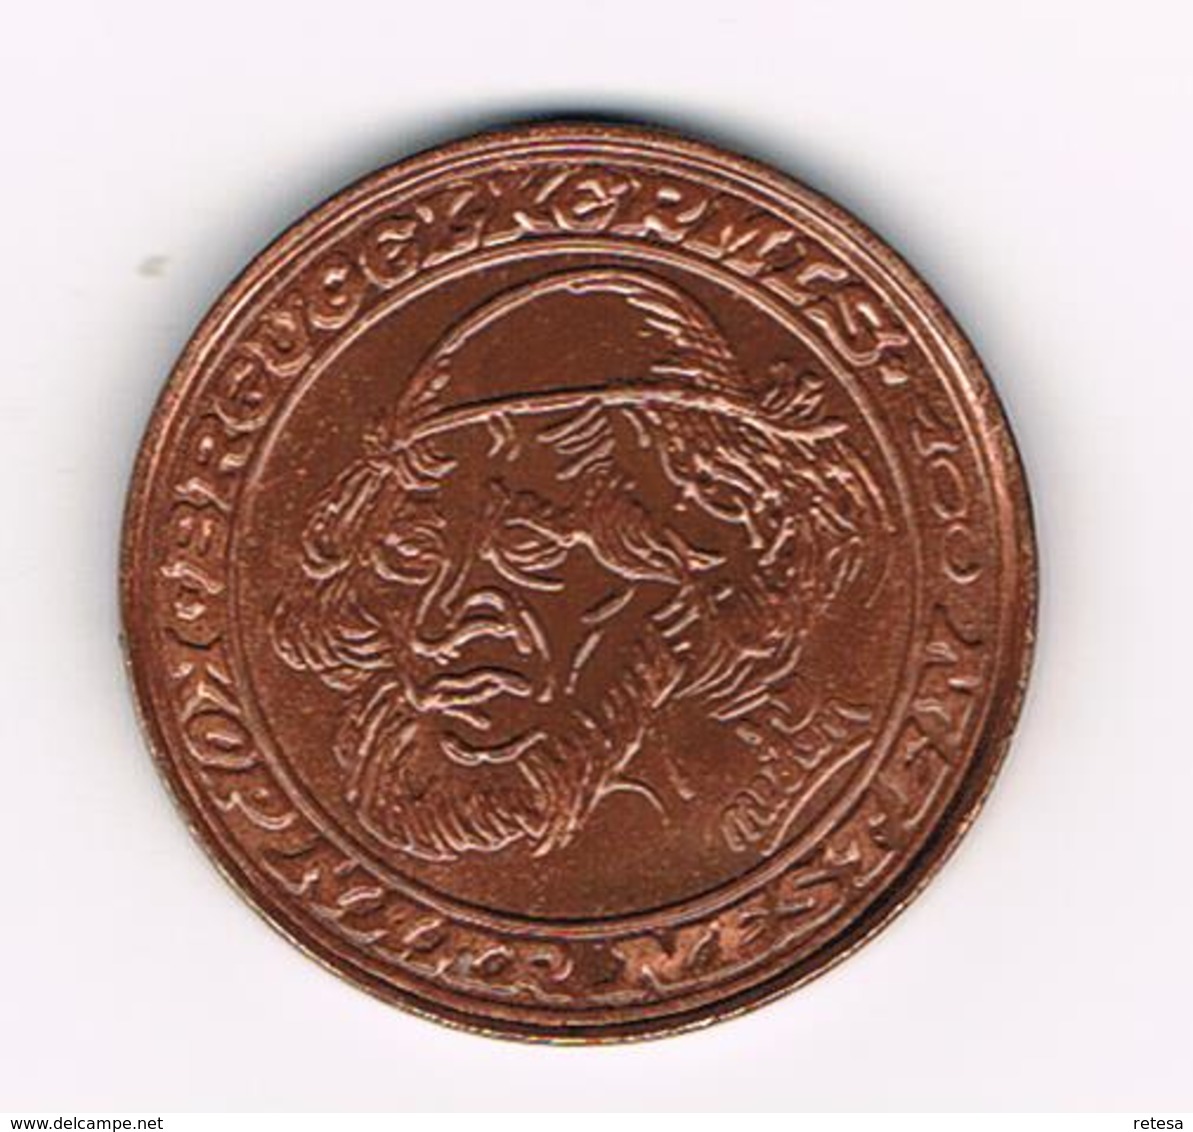 & BREUGELPENNING ONTWORPEN Door NESTEN 1982 - Pièces écrasées (Elongated Coins)